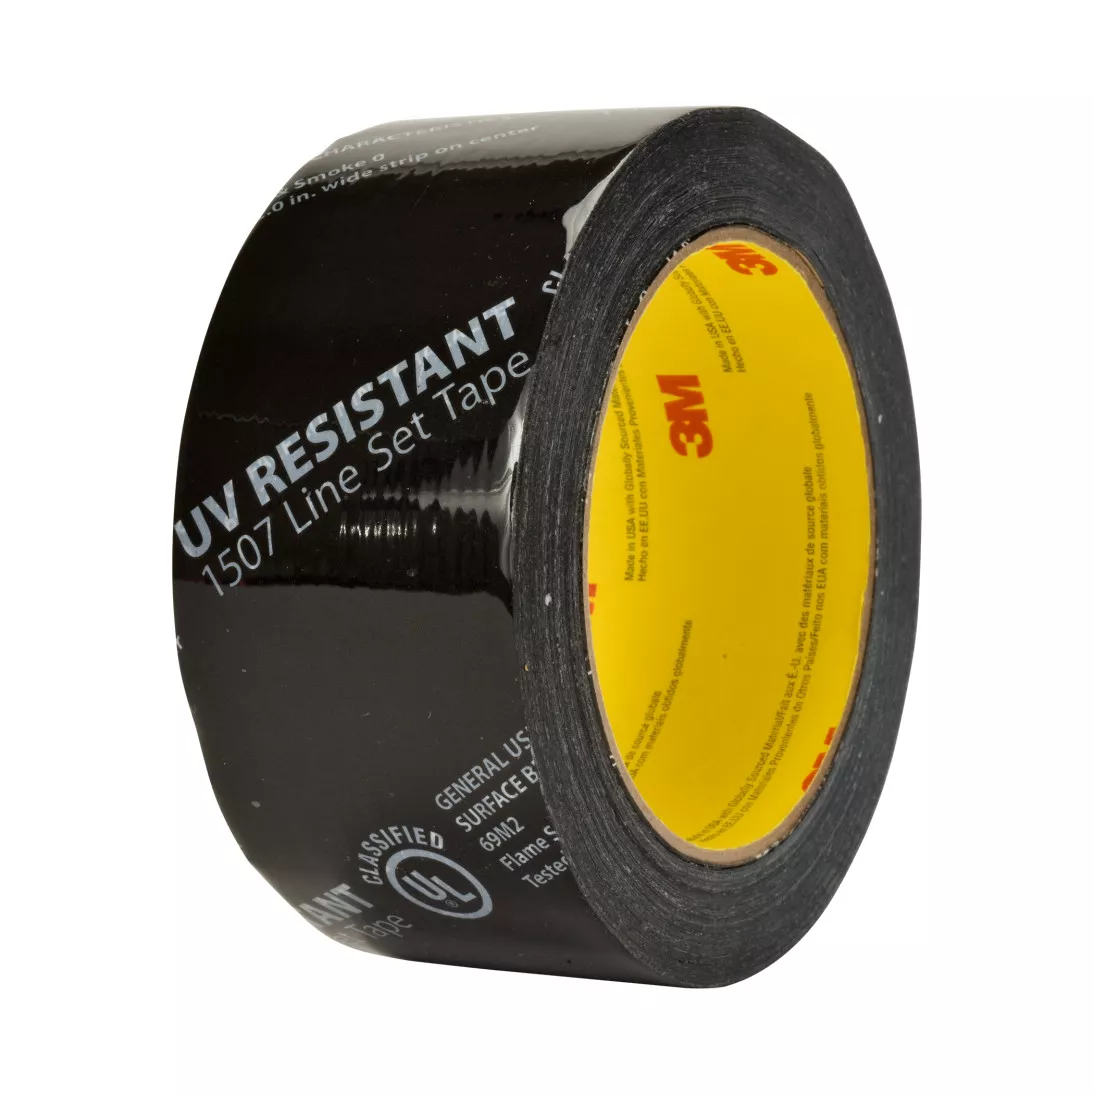 3M™ Venture Tape™ Printed Line Set Tape 1507, Black, 48 mm x 55 m, 24
rolls per case